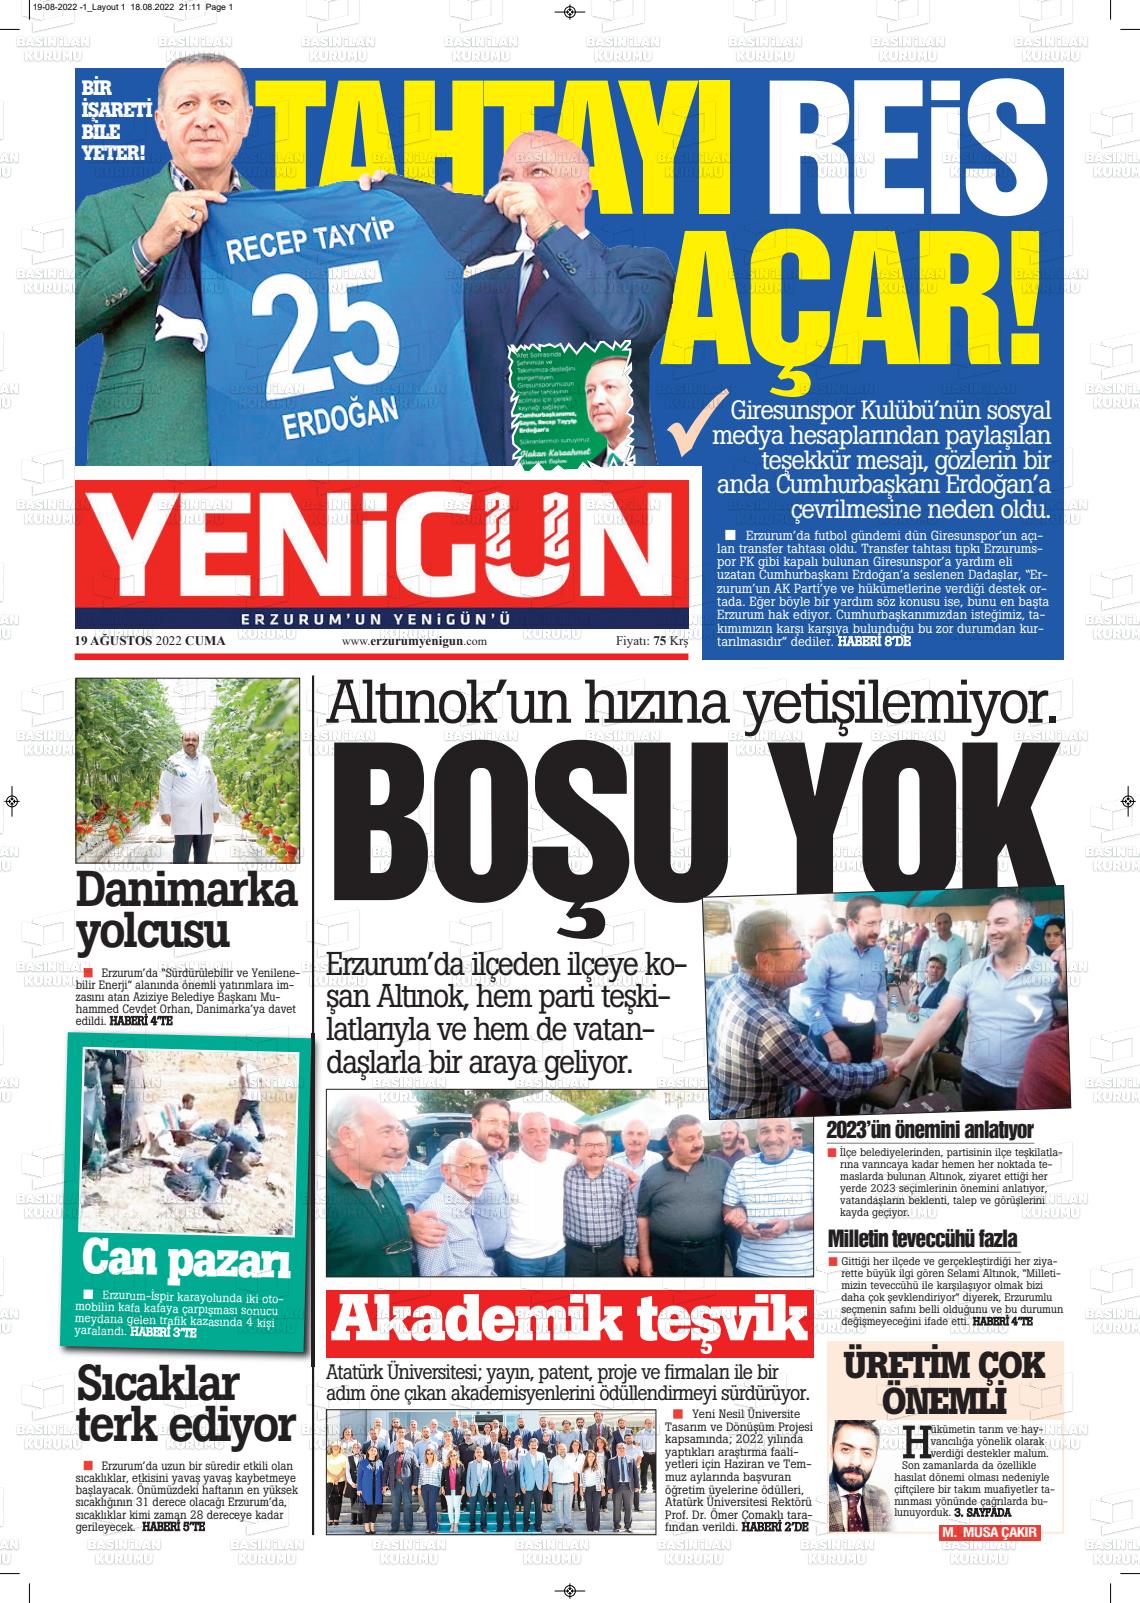 19 Ağustos 2022 Erzurum Yenigün Gazete Manşeti